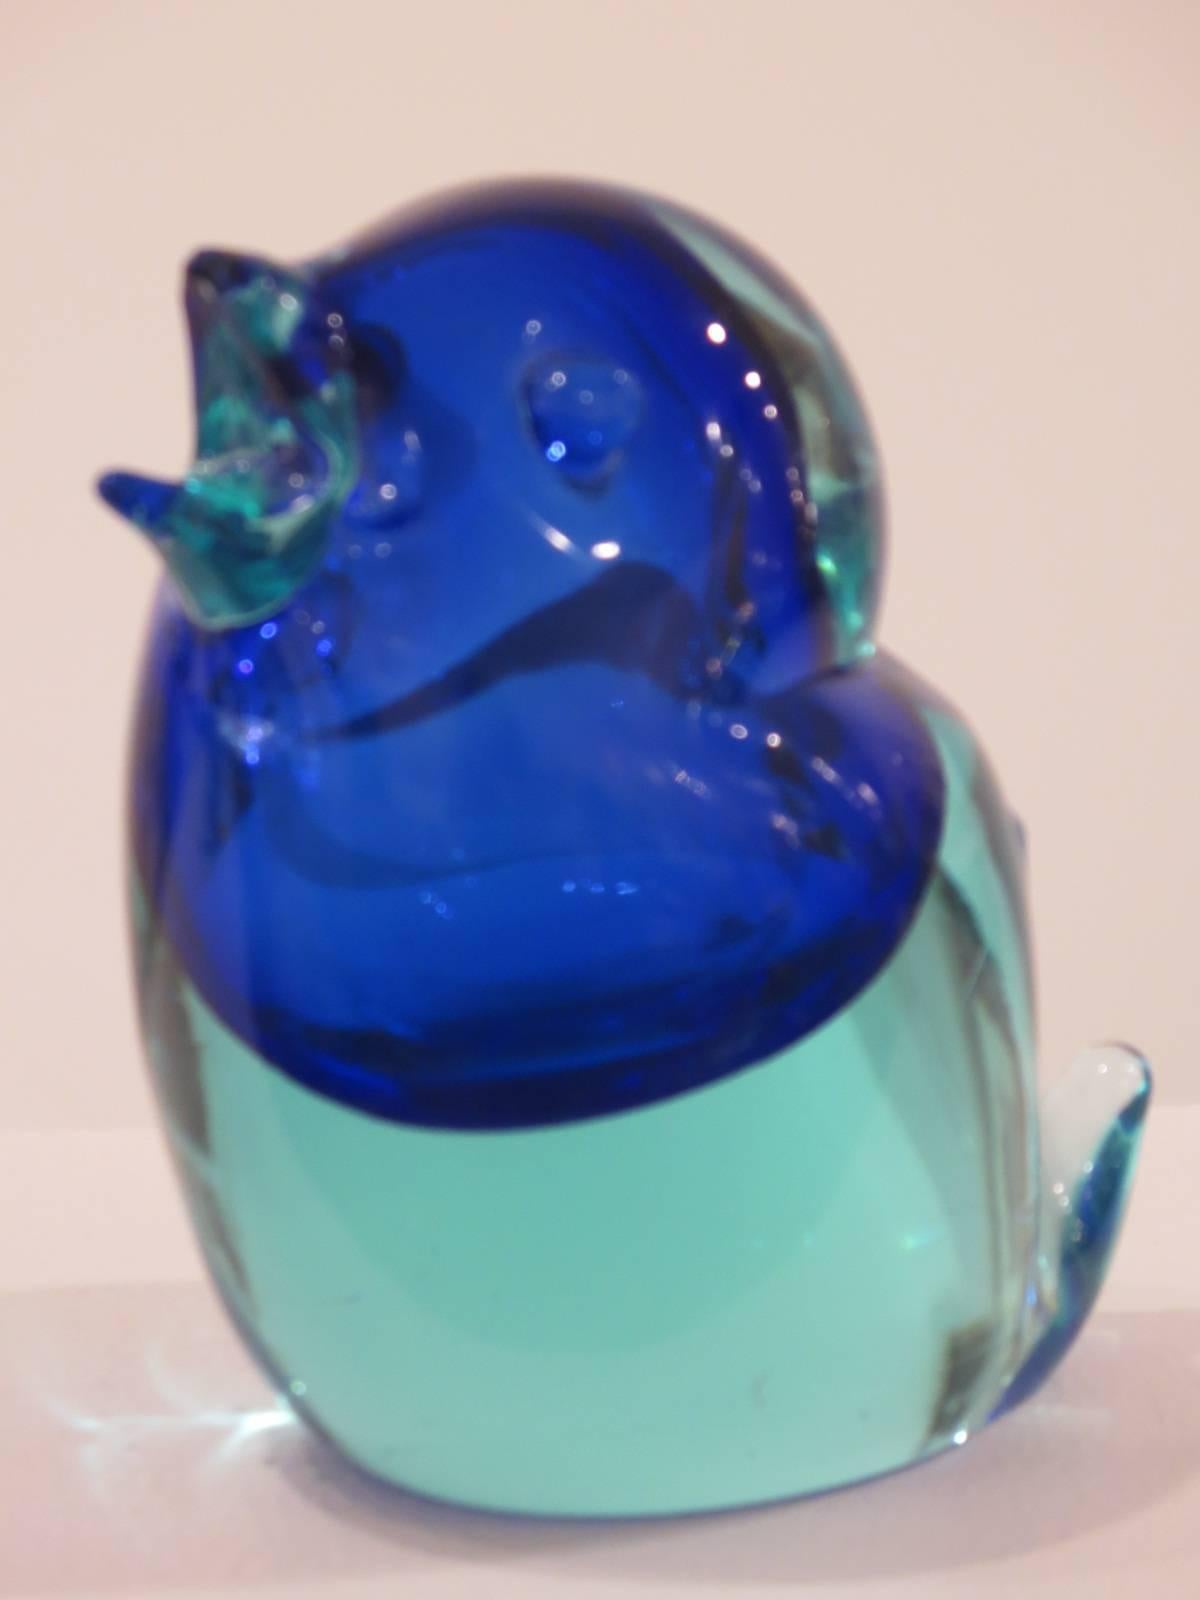 Wonderful blue-aquamarine bird in the traditional 1950s style of Murano glass.